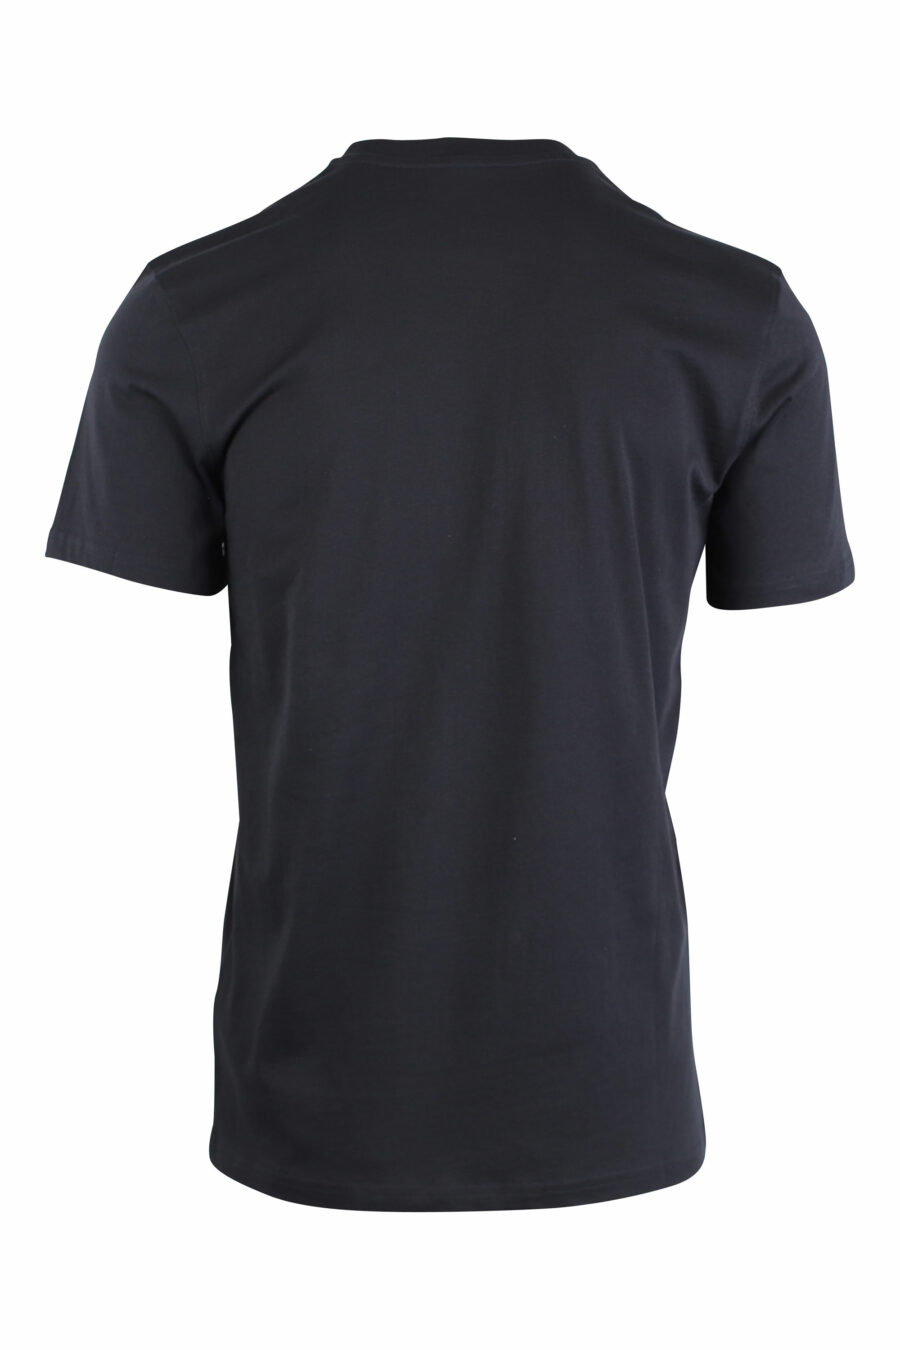 T-shirt noir avec logo à rayures blanches - IMG 1479